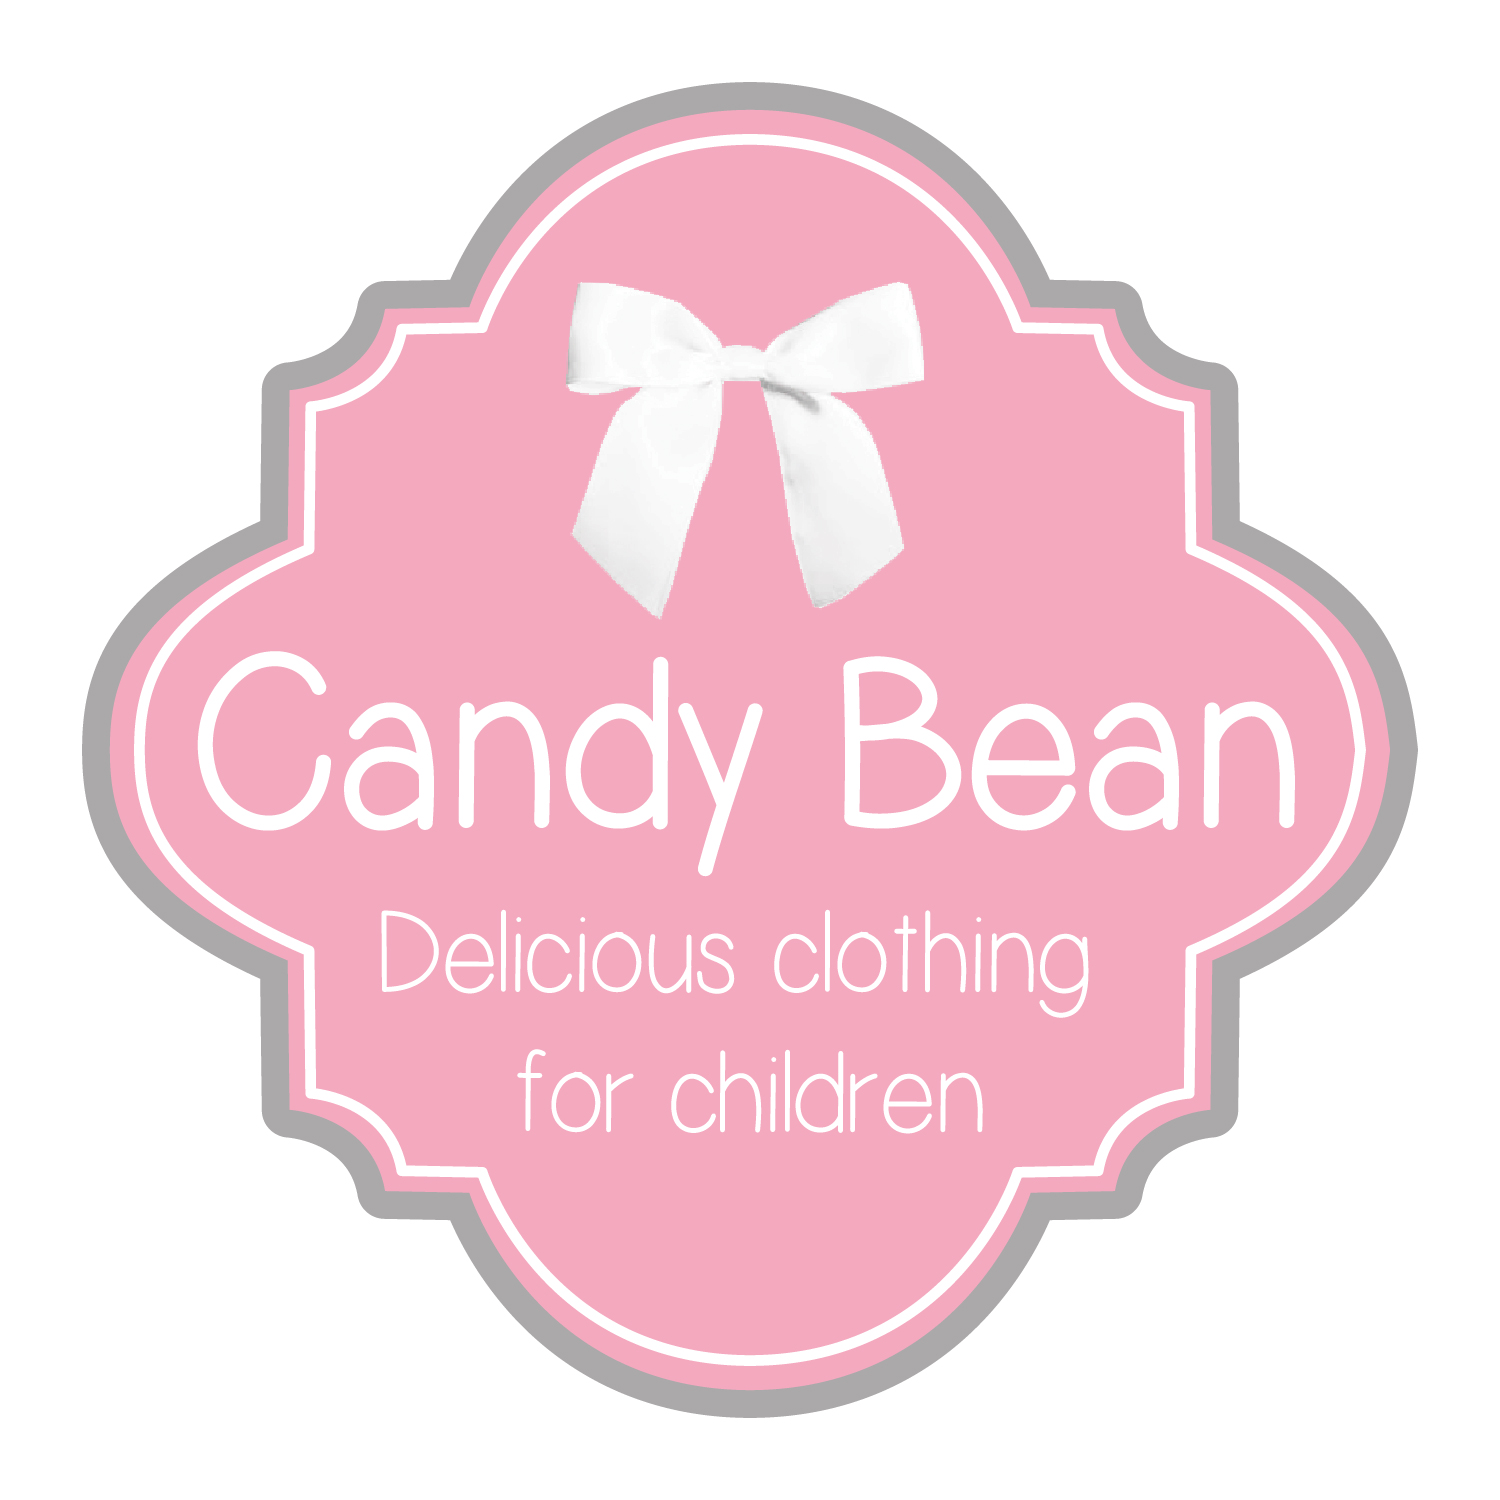 candy bean logo square.jpg